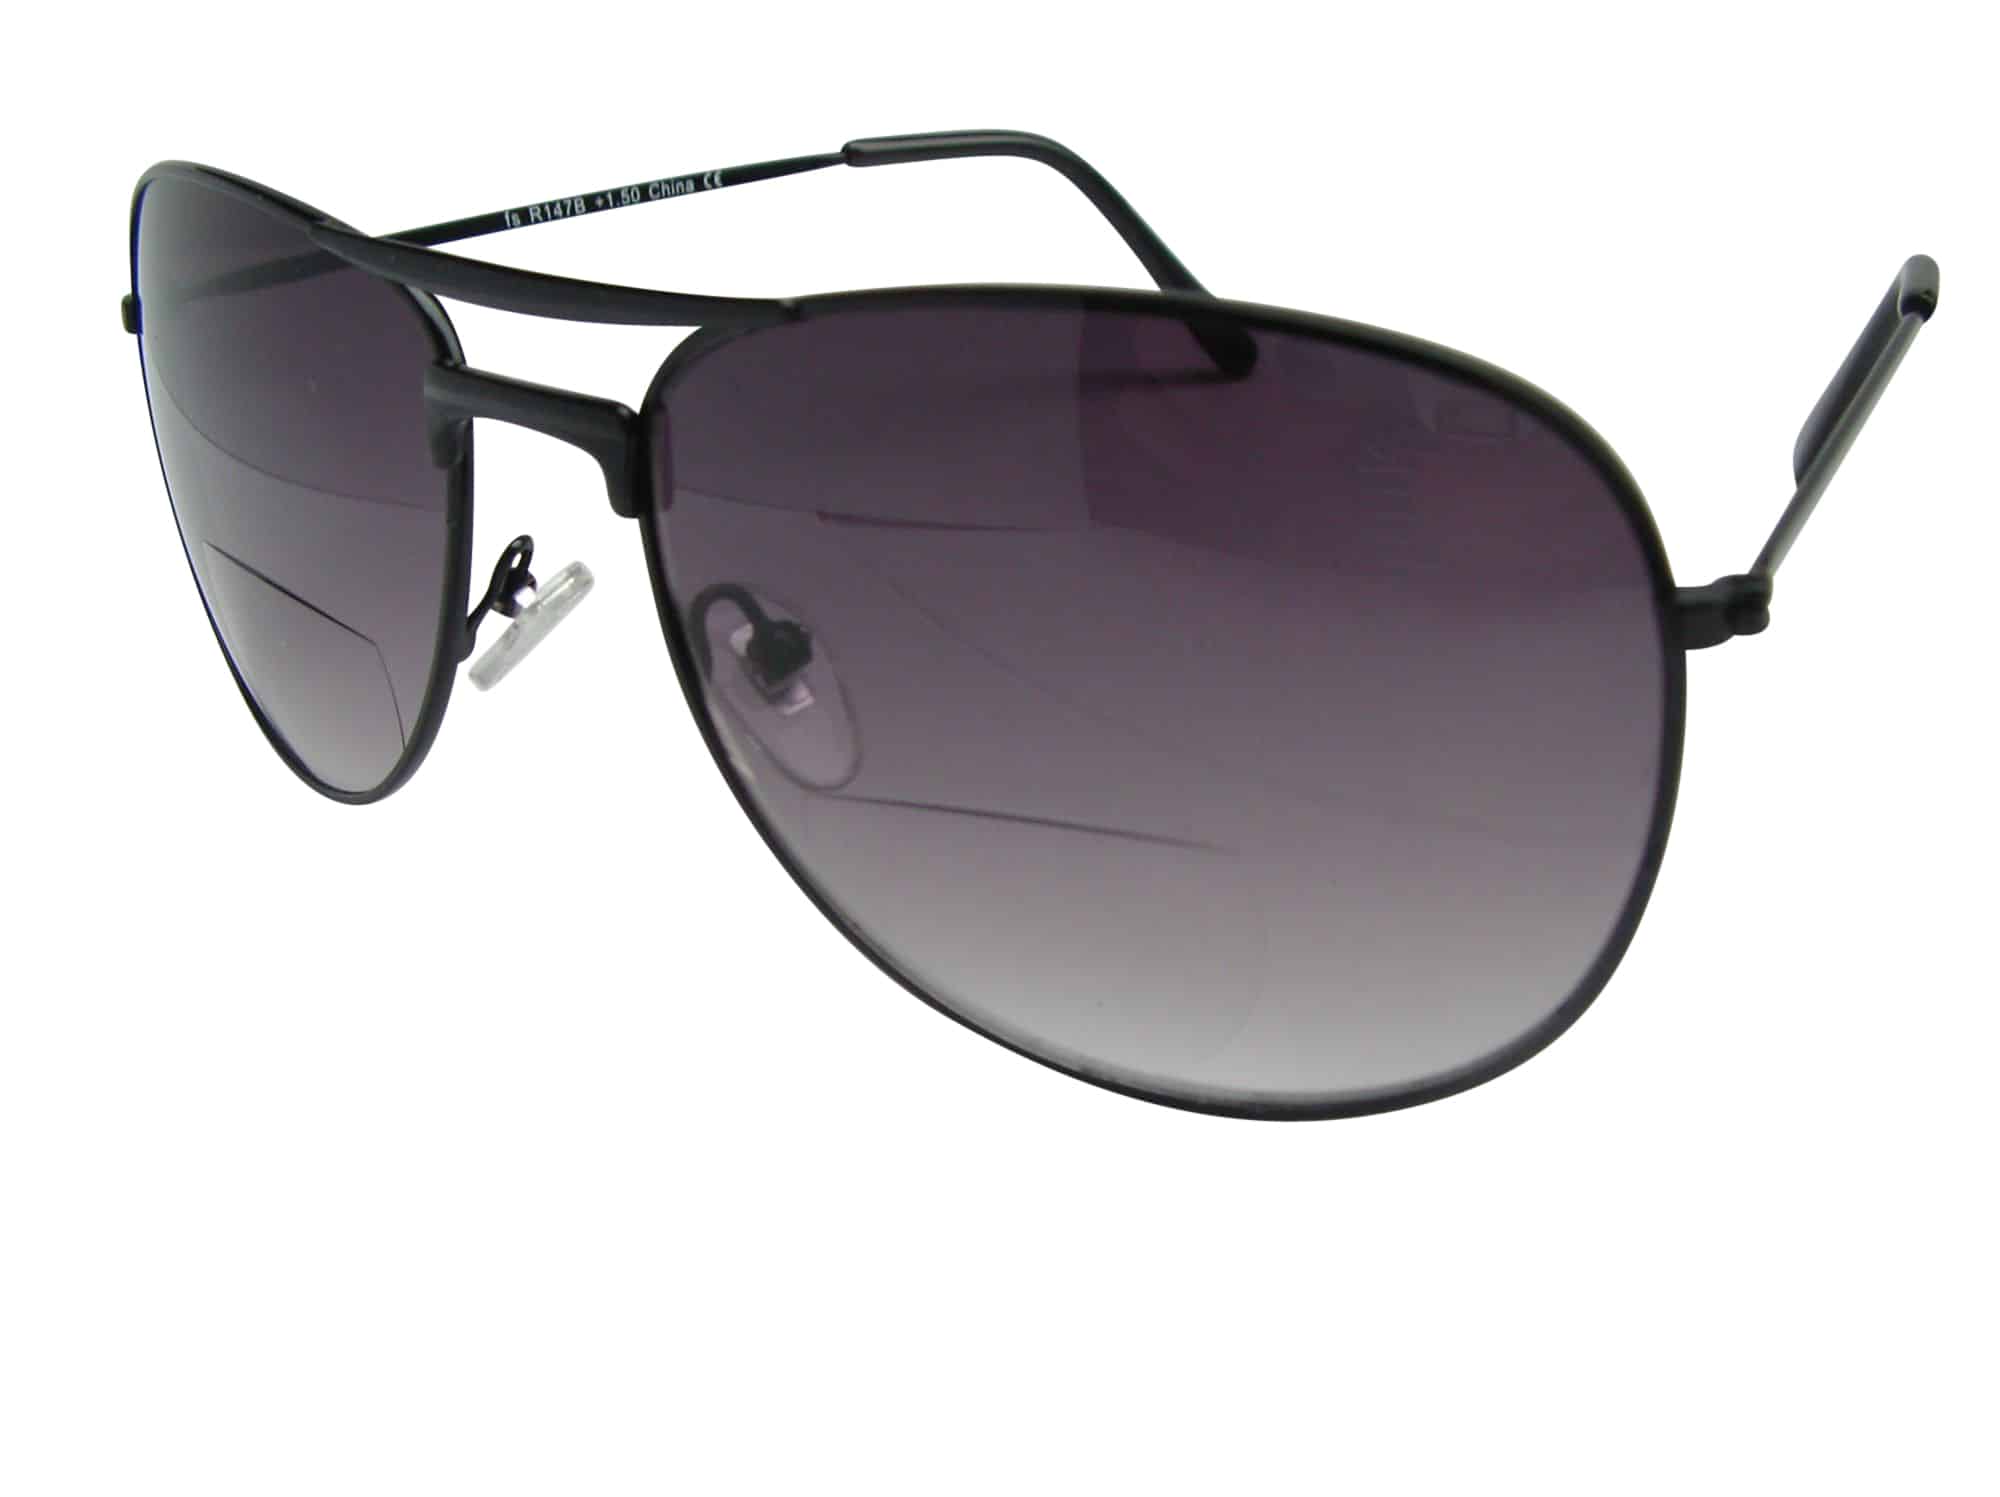 Mario Aviator Bifocal Sunglasses in Black